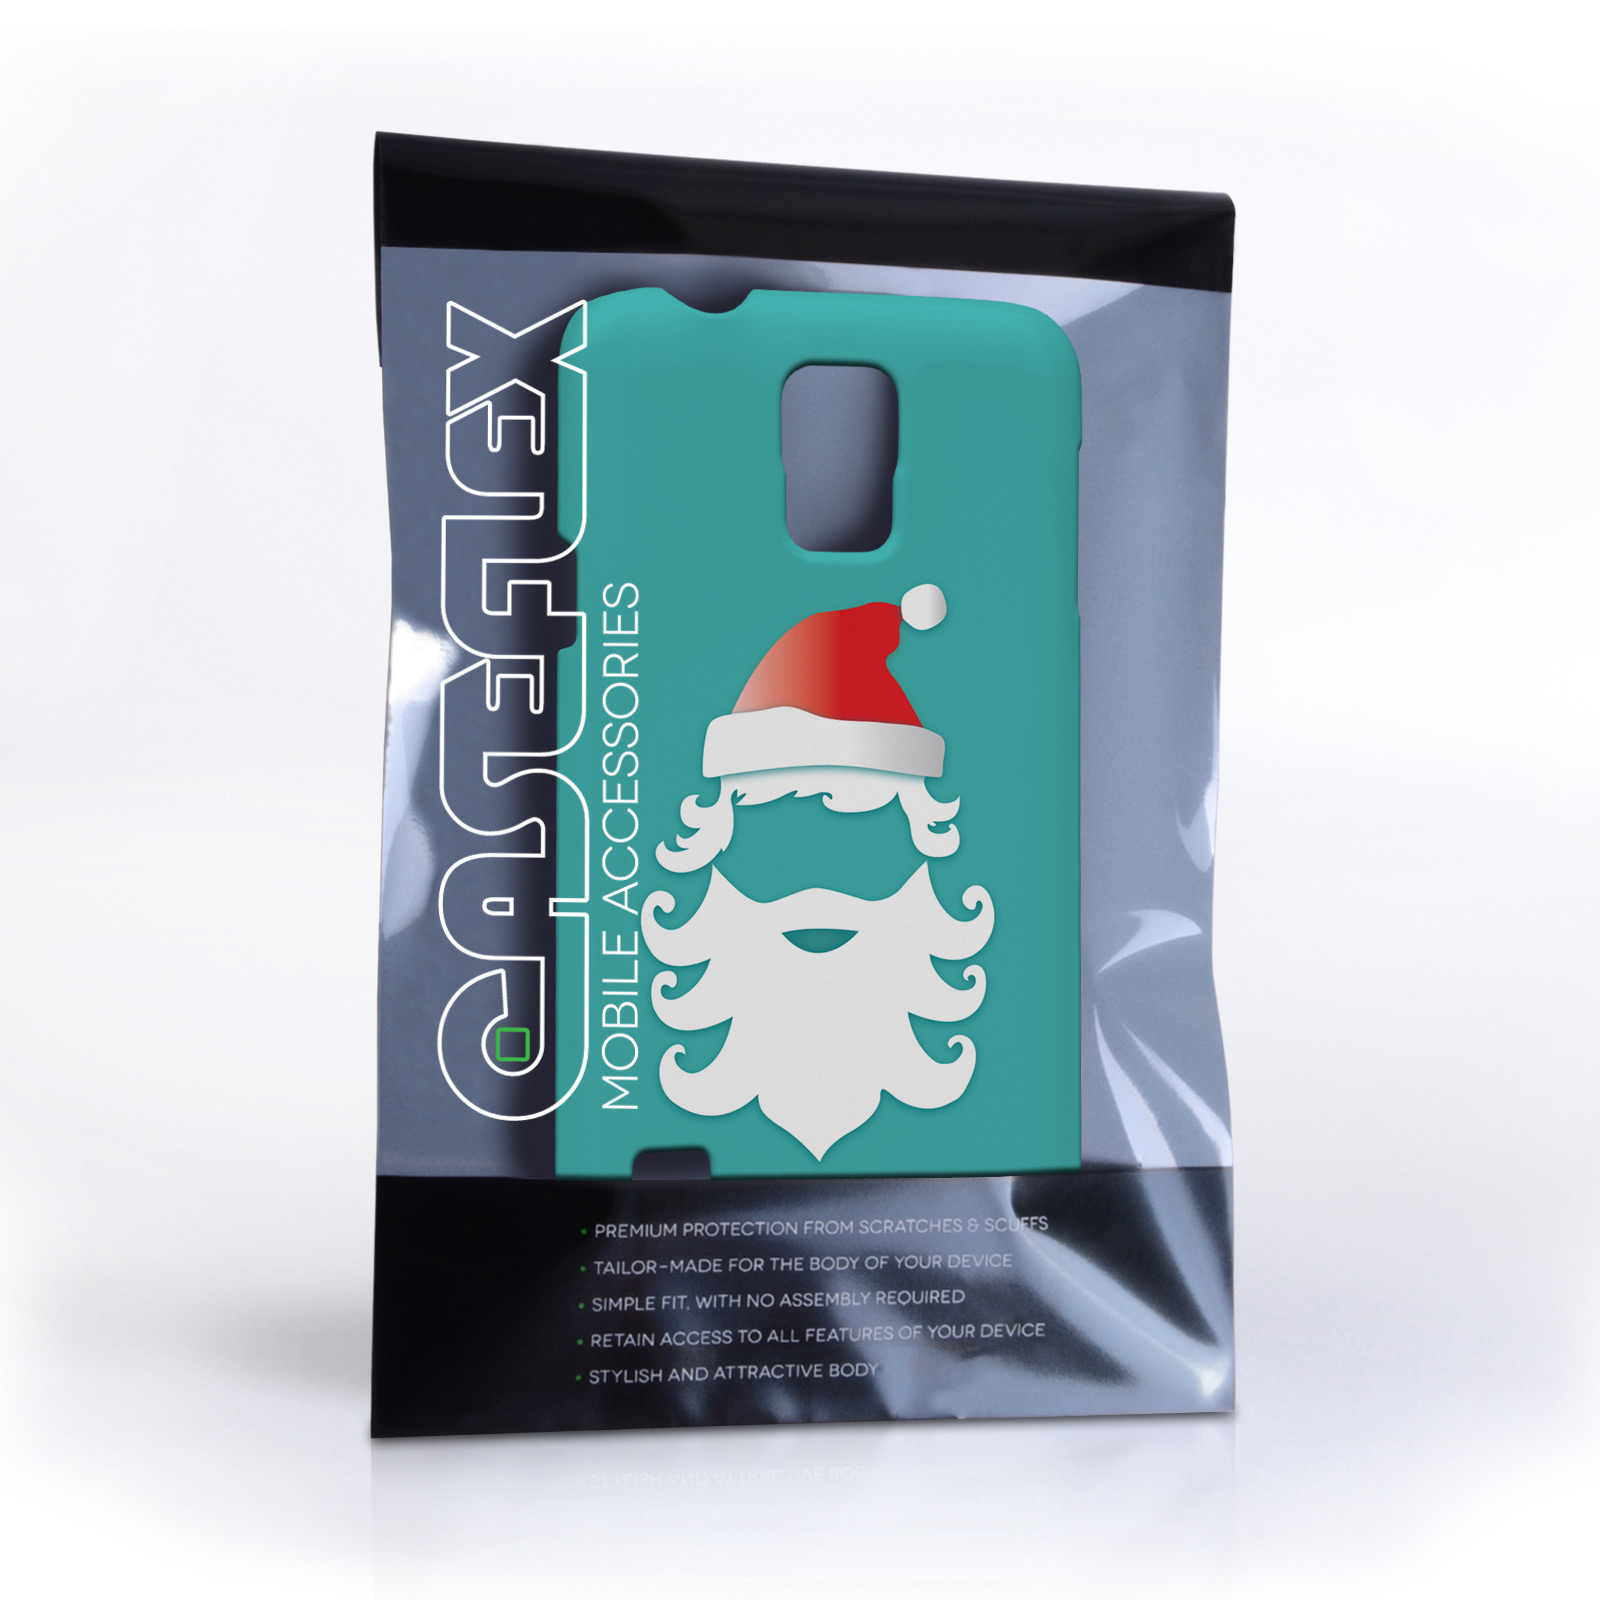 Caseflex Samsung Galaxy S5 Christmas Santa Claus Hard Case